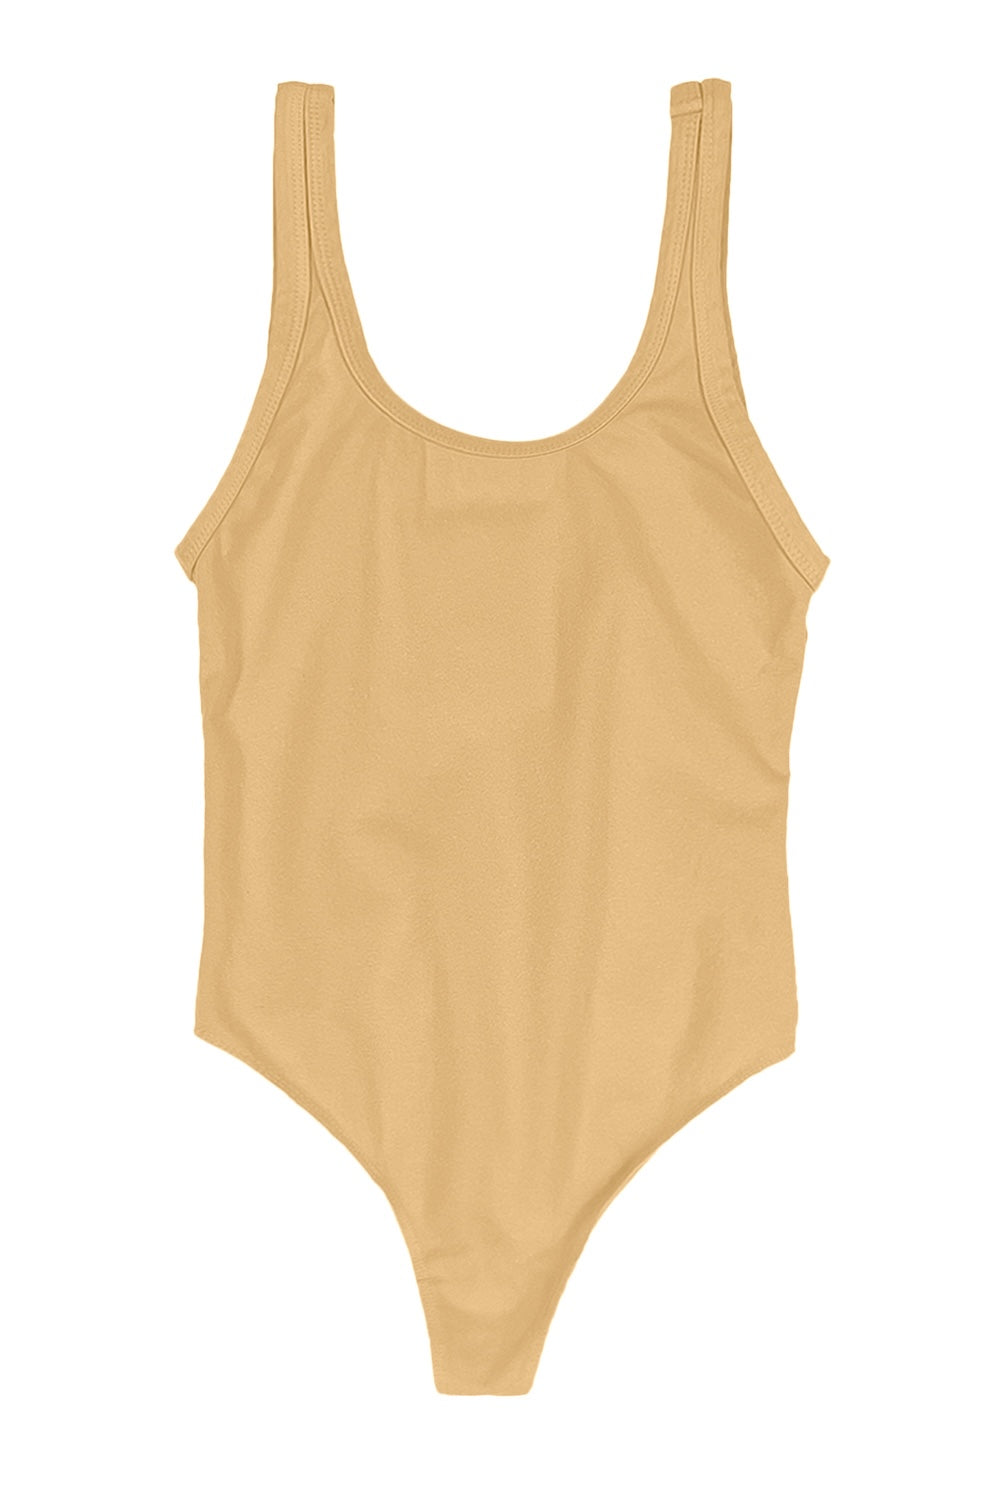 Bodysuit | Jungmaven Hemp Clothing & Accessories / Color: Oat Milk